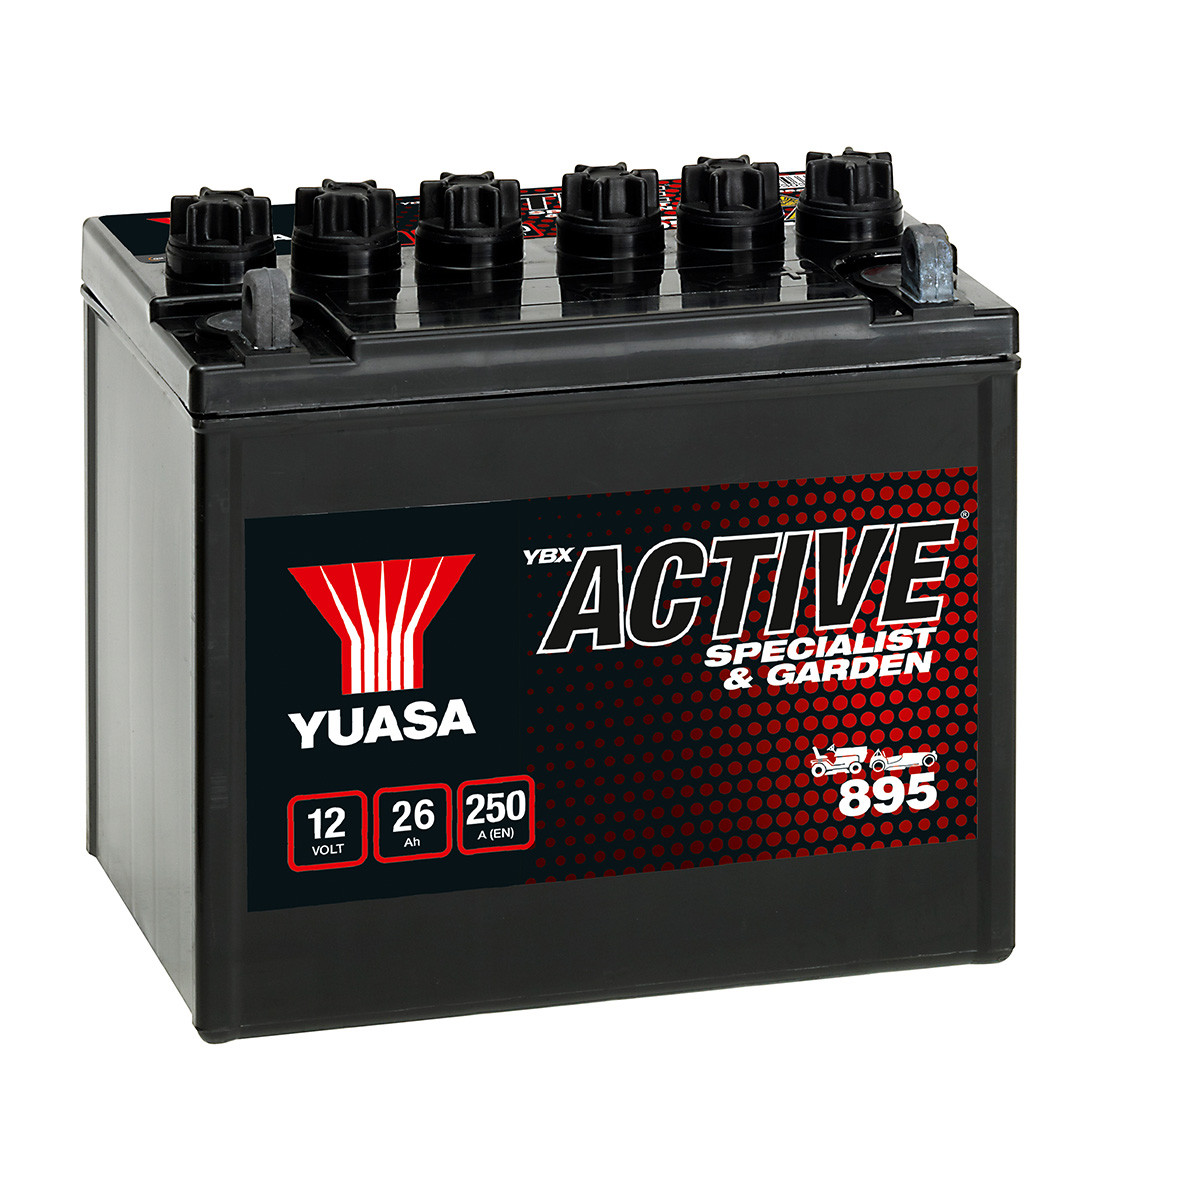 Batteries - 895 HR - YUASA